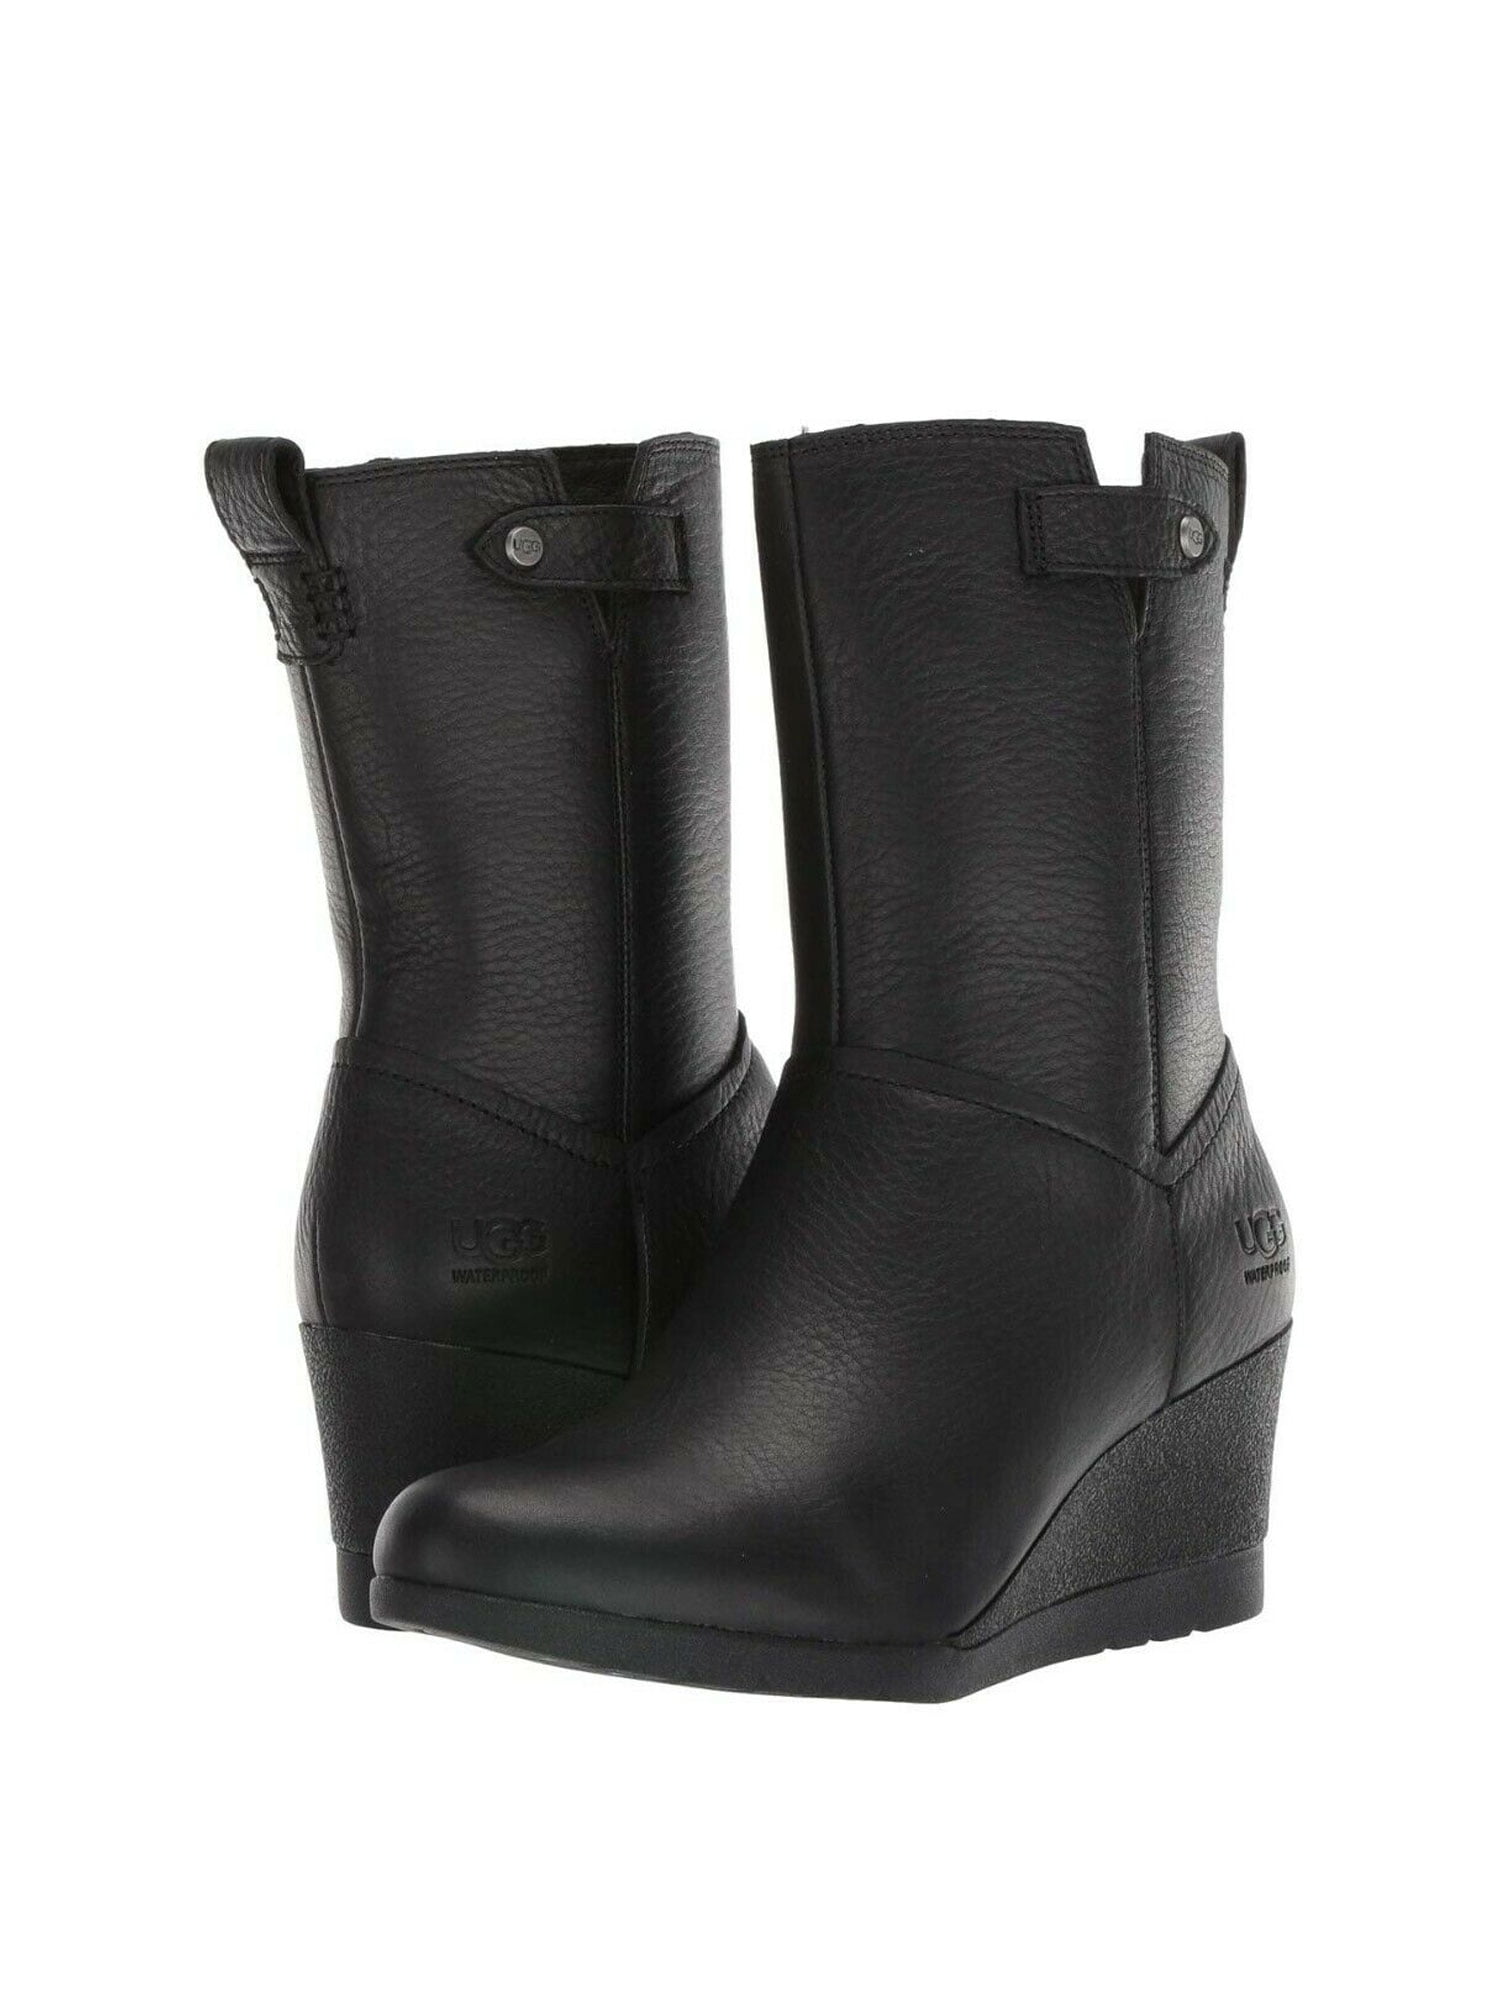 womens waterproof wedge boots